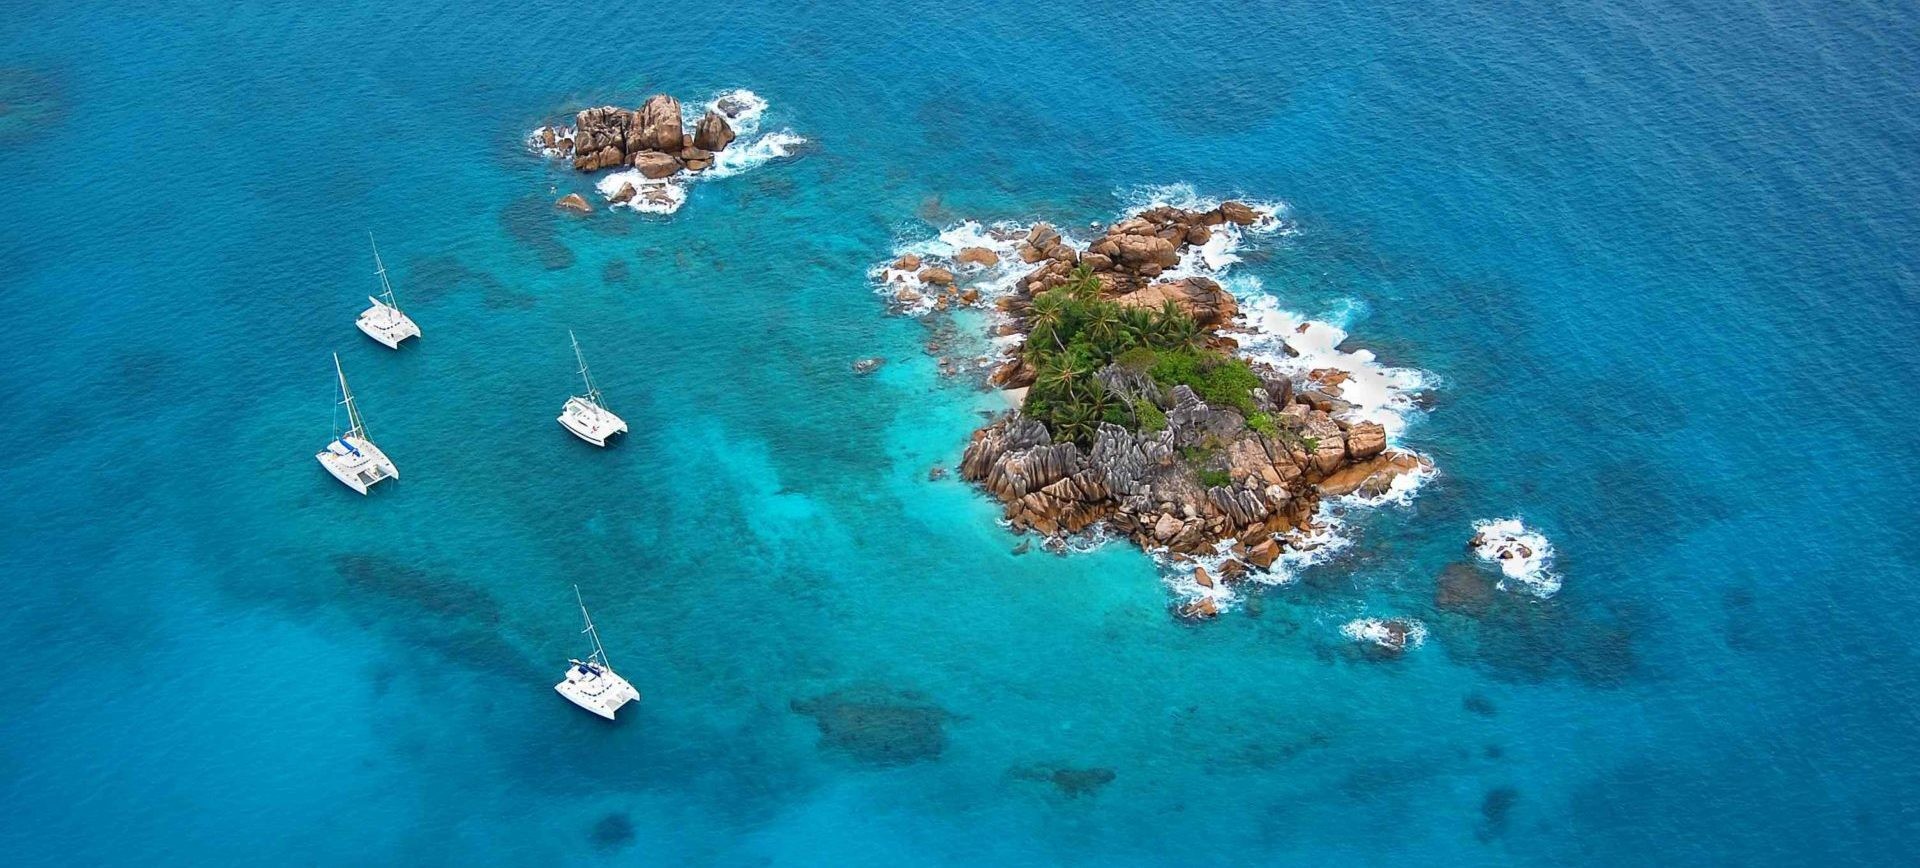 Catamaran Cruise: December in the Seychelles